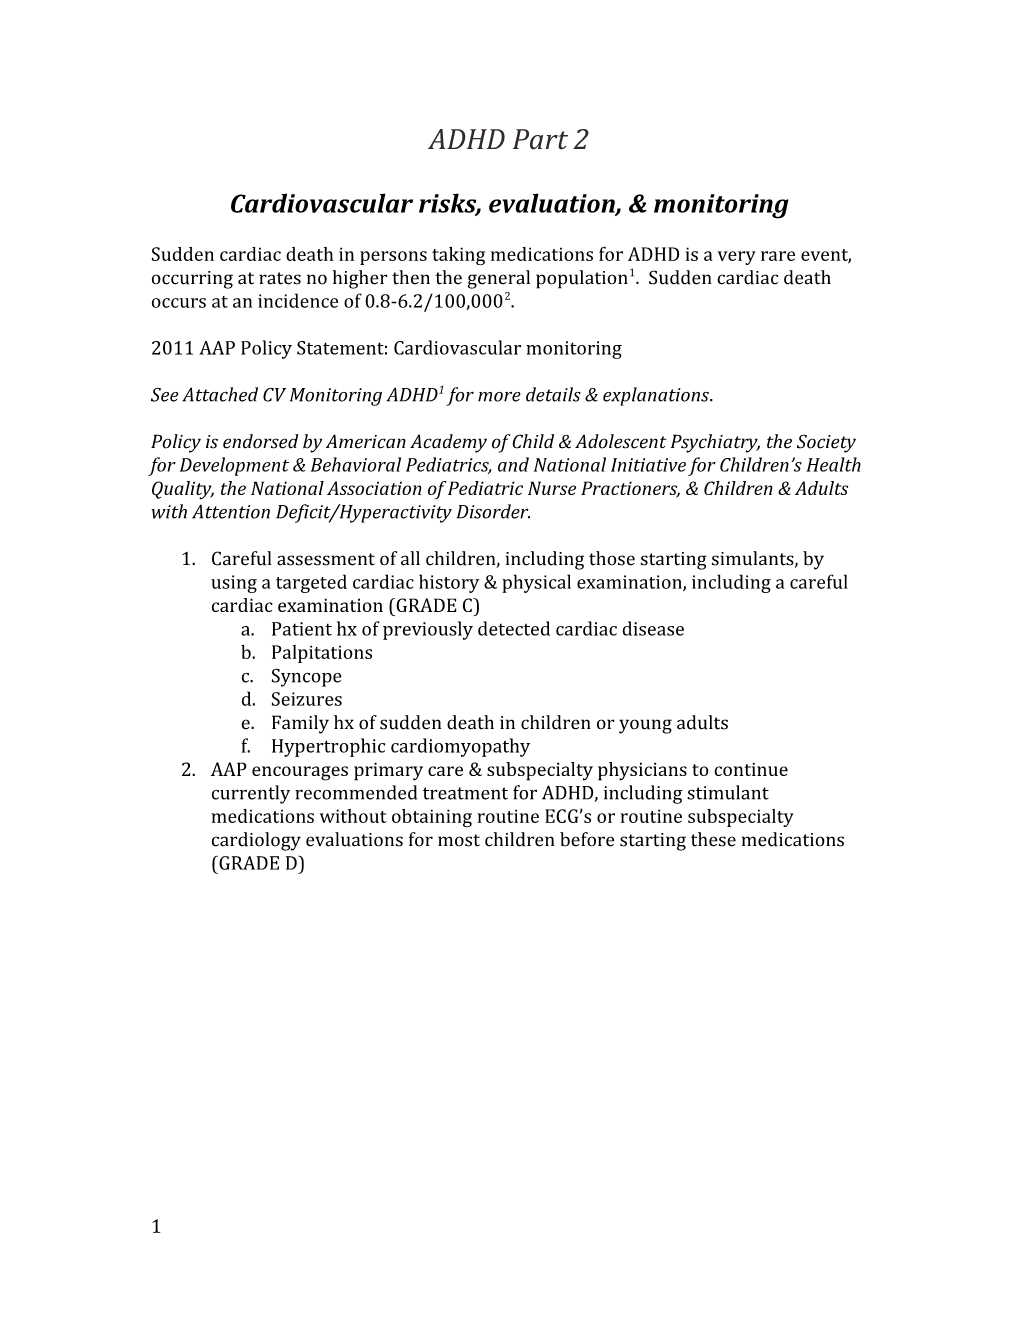 Cardiovascular Risks, Evaluation, & Monitoring